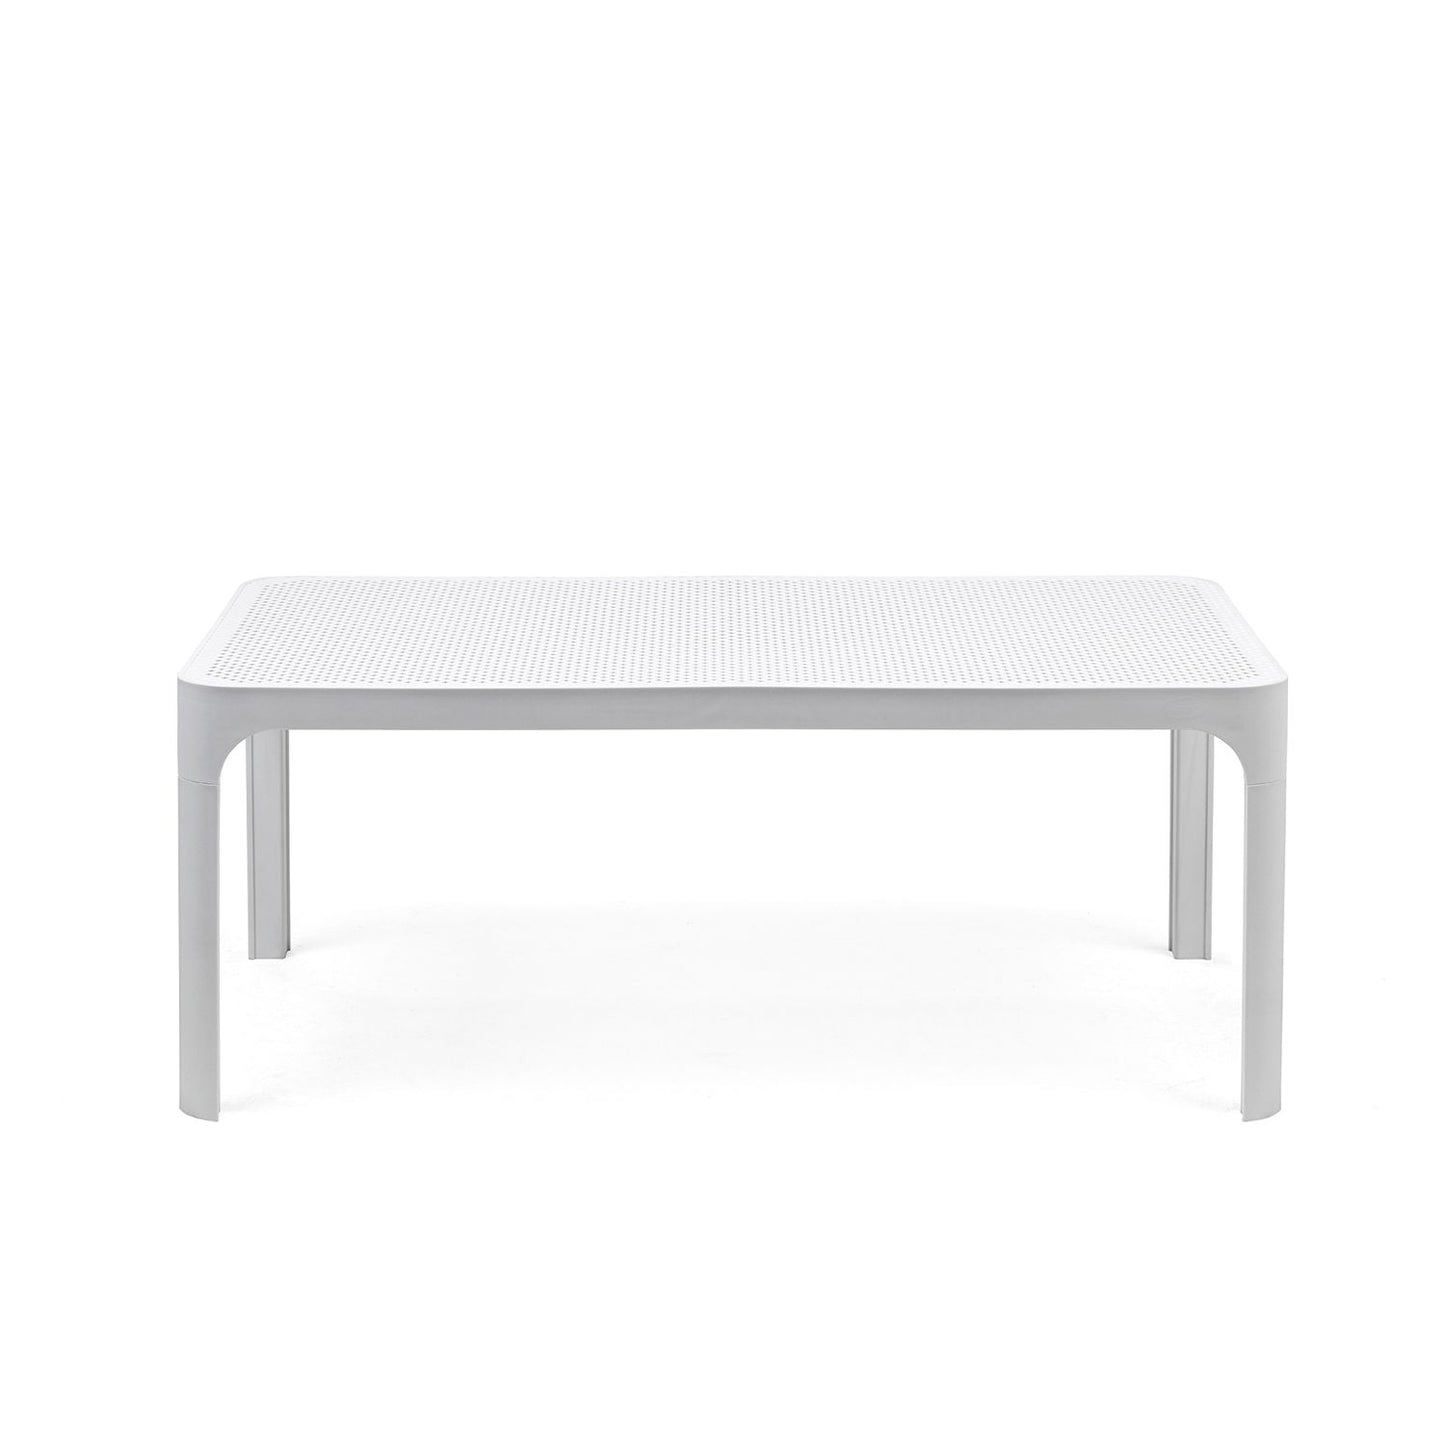 Net Table 100cm Garden Table By Nardi - White